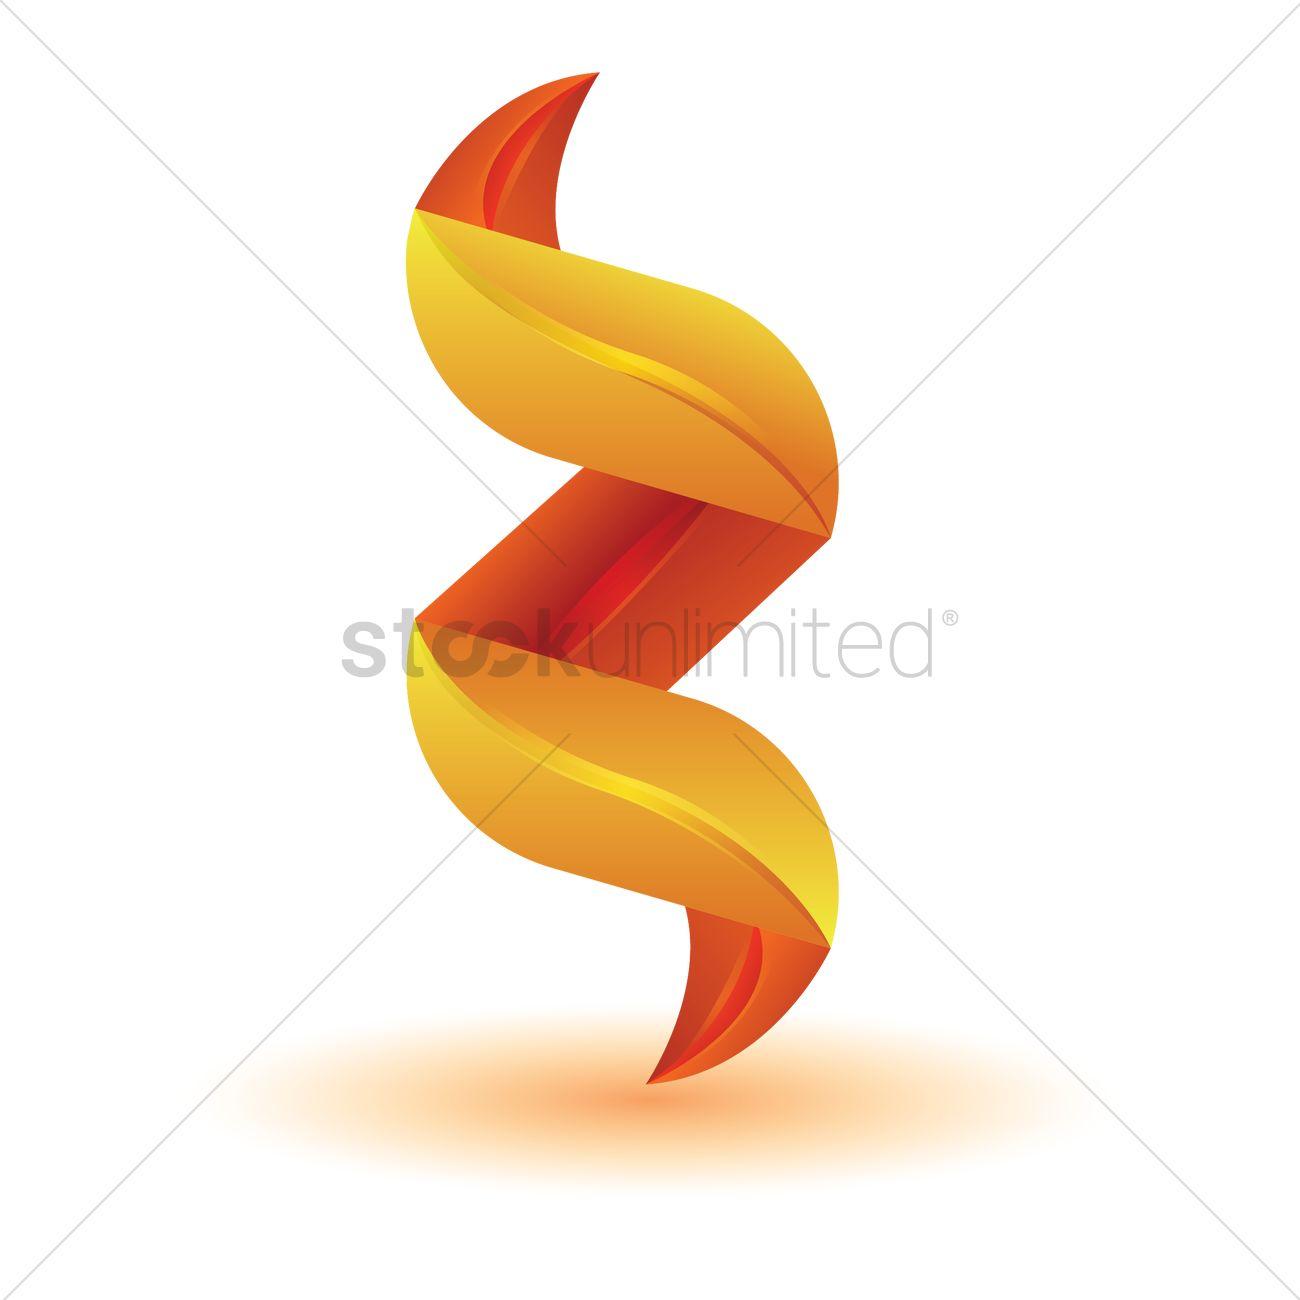 Swirl Logo - Swirl logo element Vector Image - 1938813 | StockUnlimited